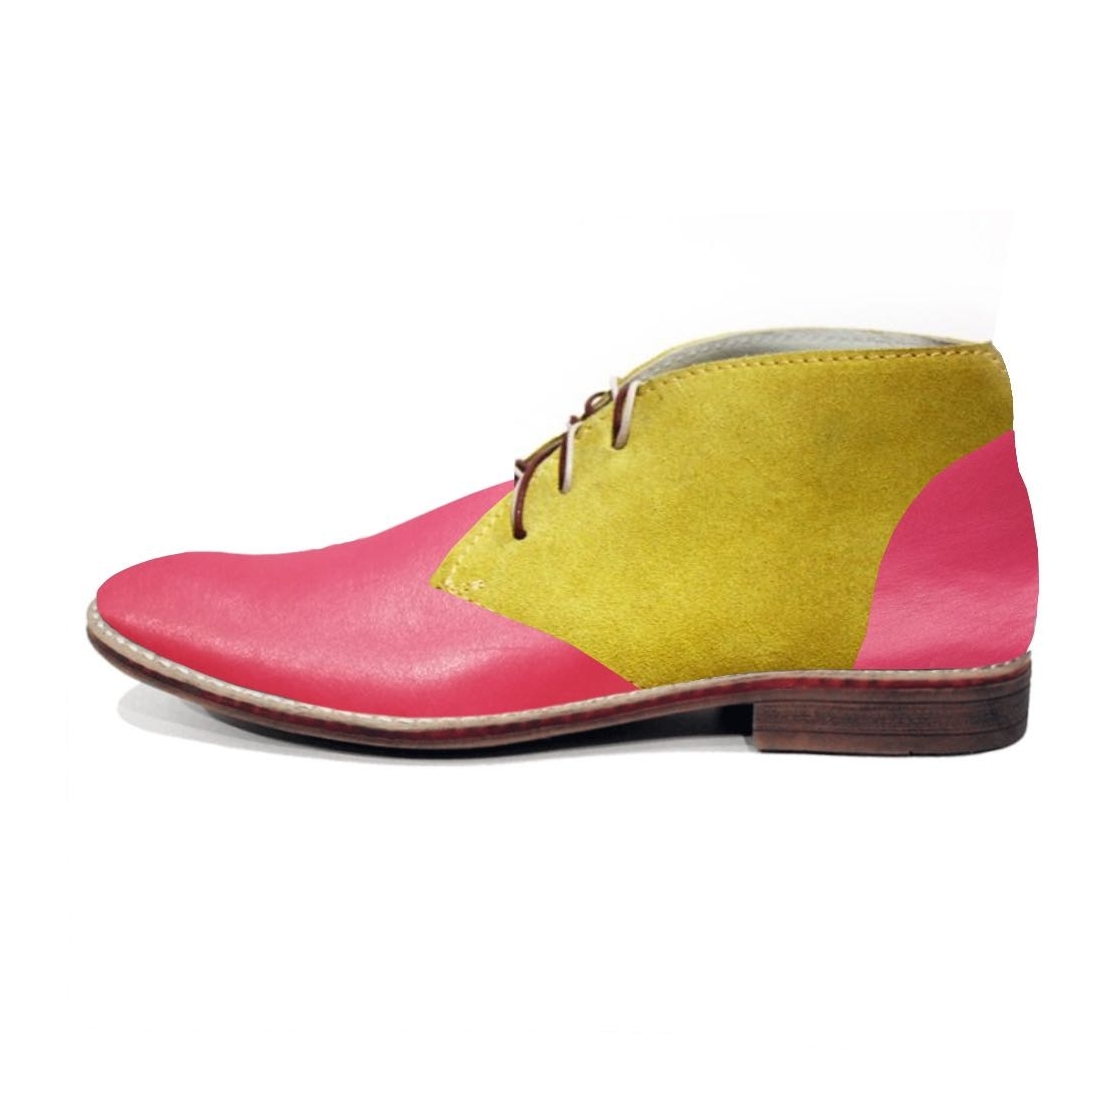 Modello Primavello - Buty Chukka - Handmade Colorful Italian Leather Shoes